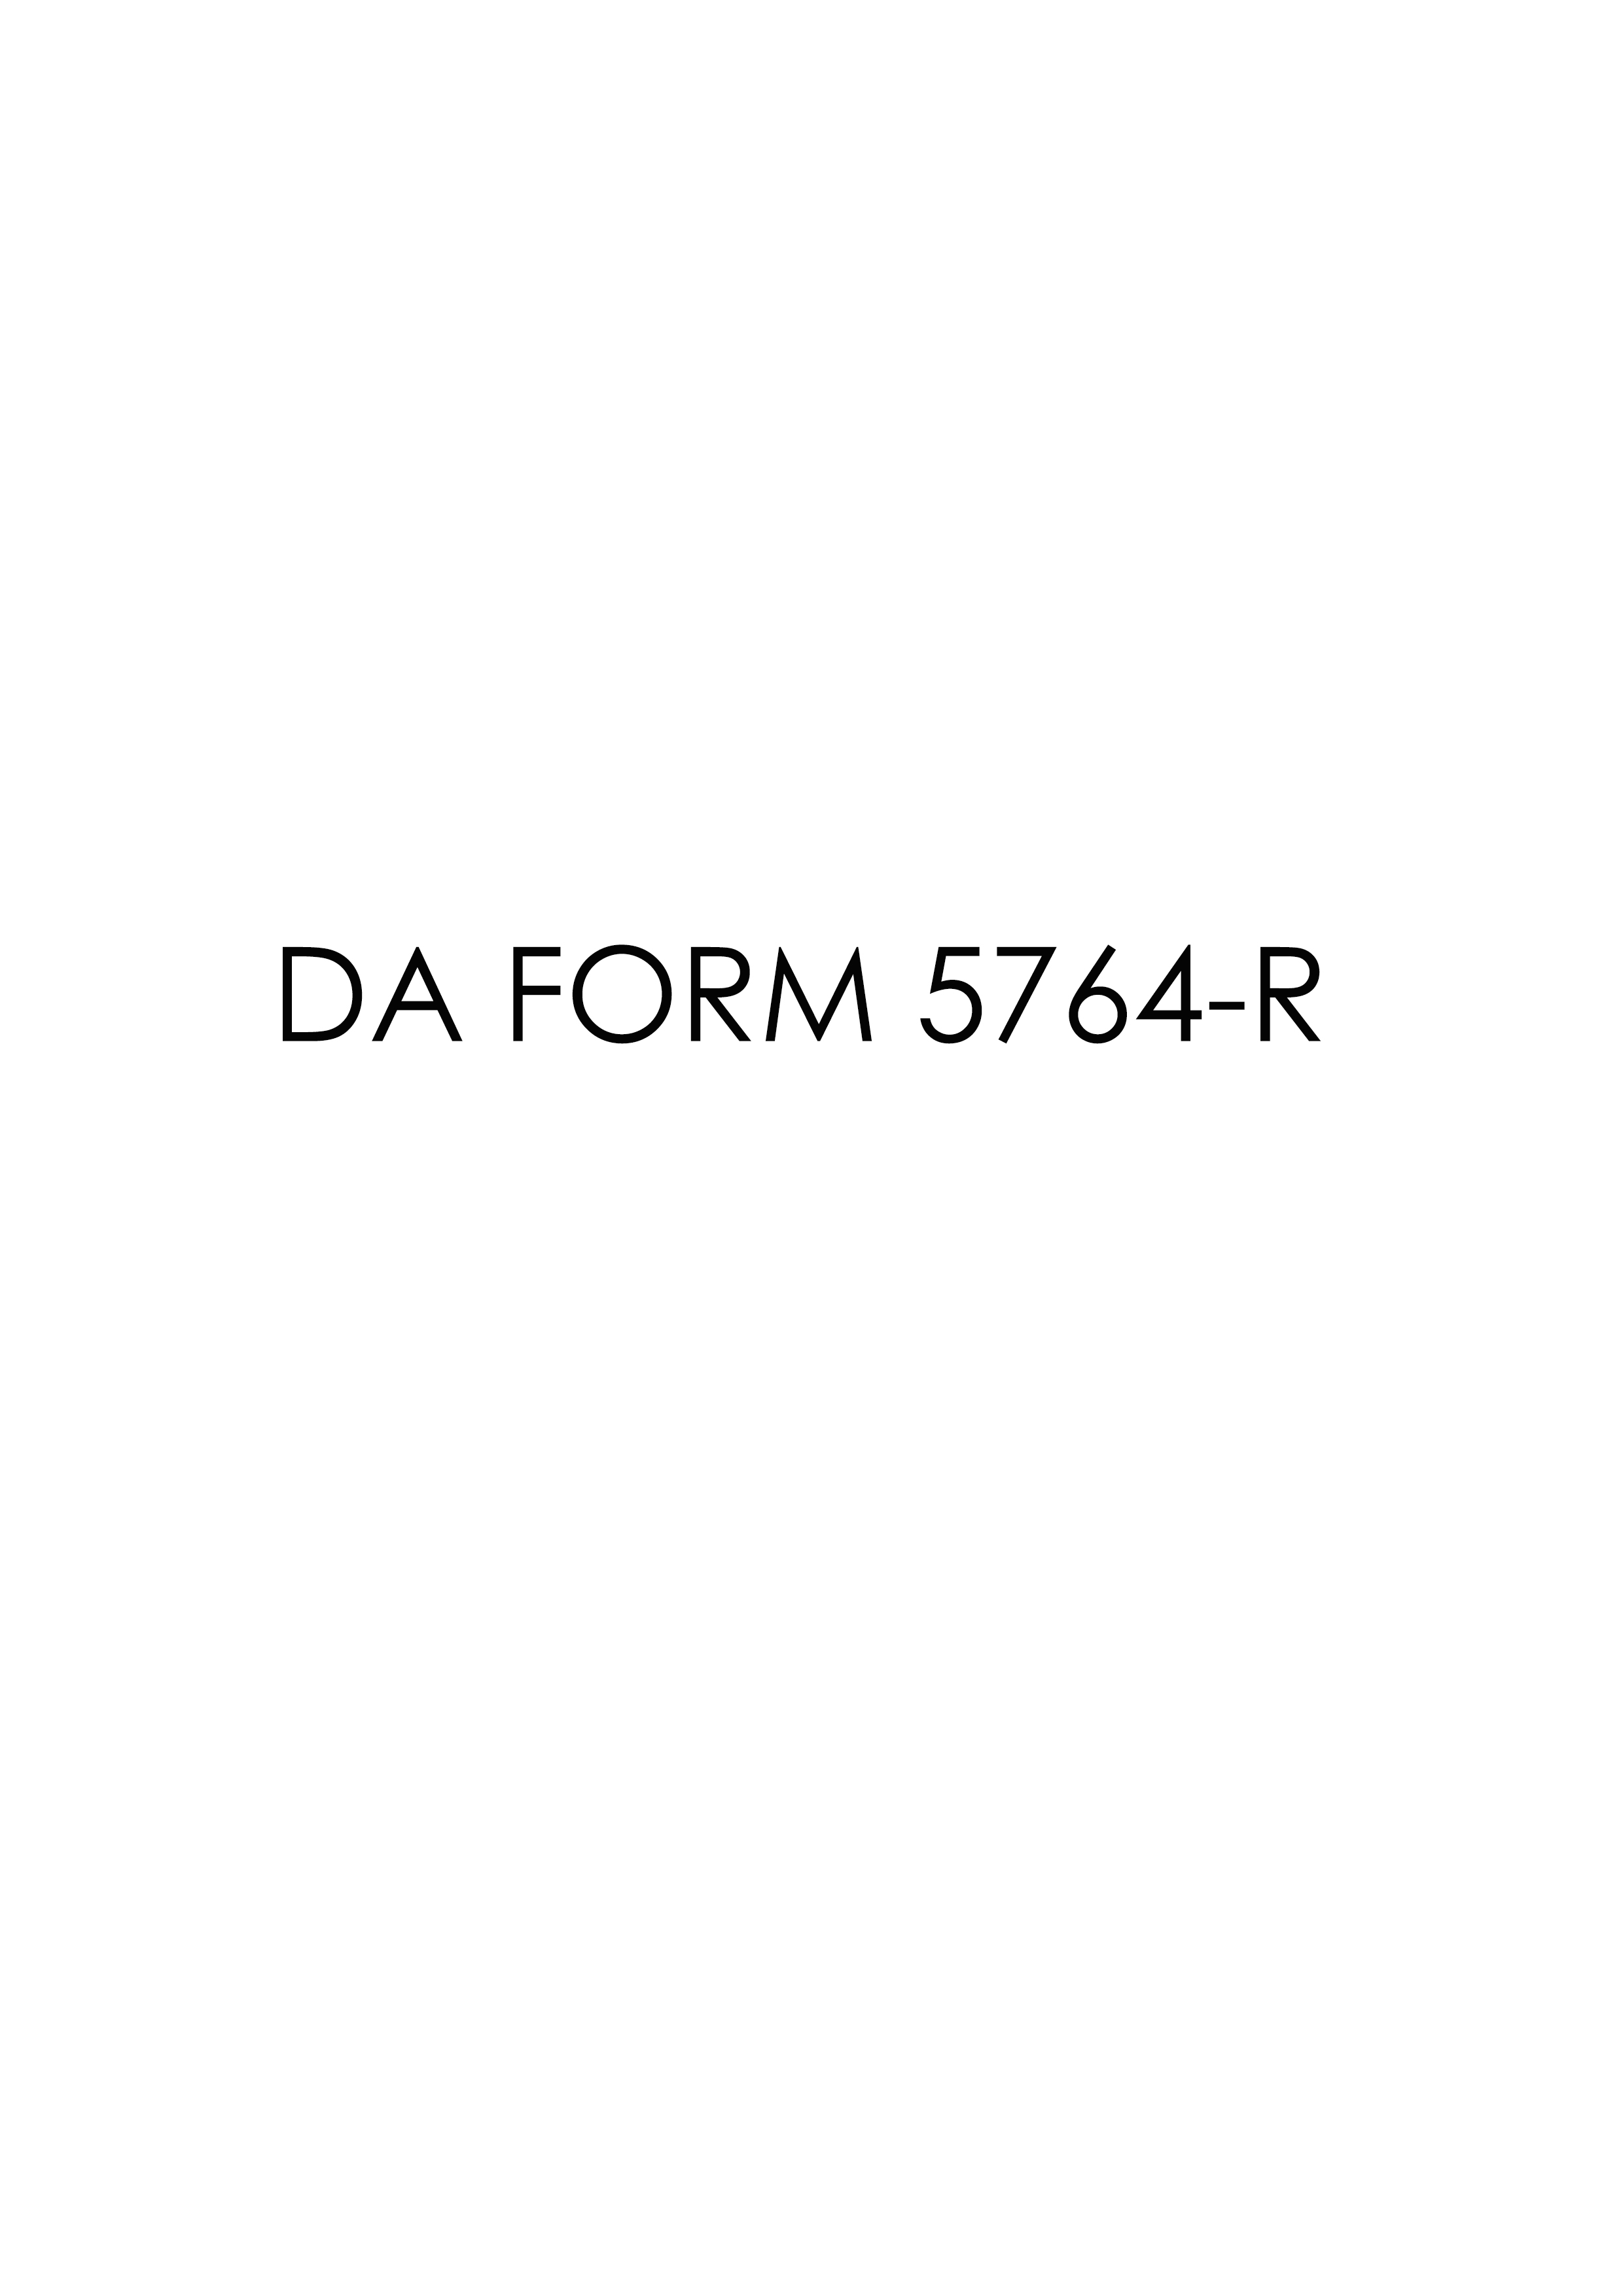 da Form 5764-R fillable